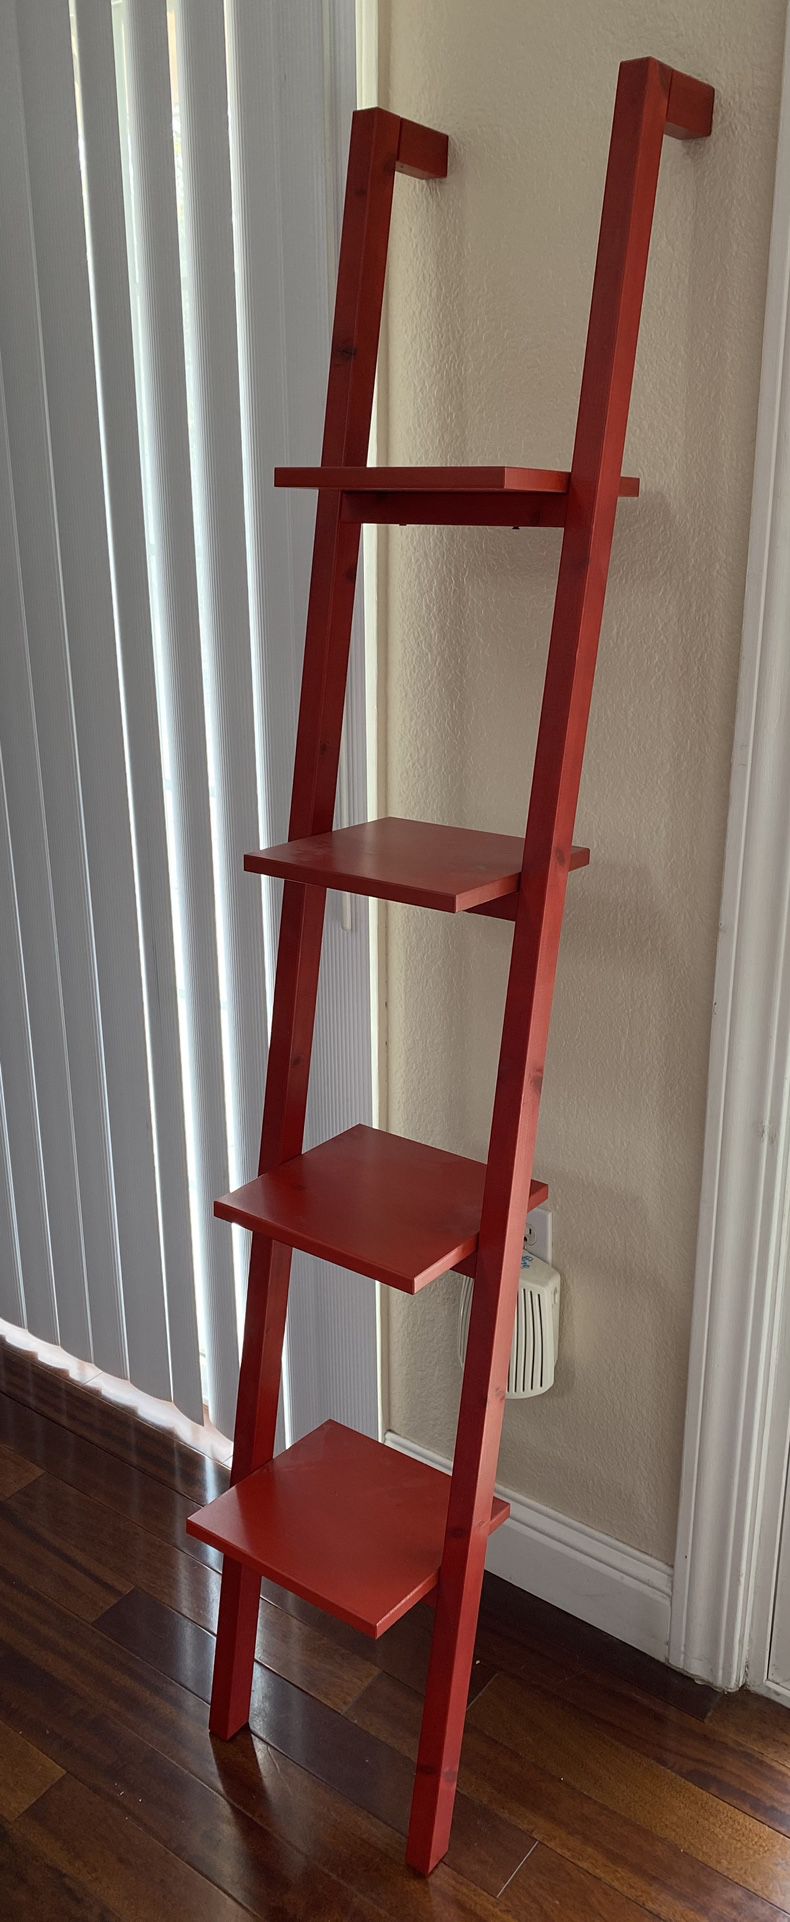 Modern Red Leaning Ladder Shelf - A Bold Accent Piece